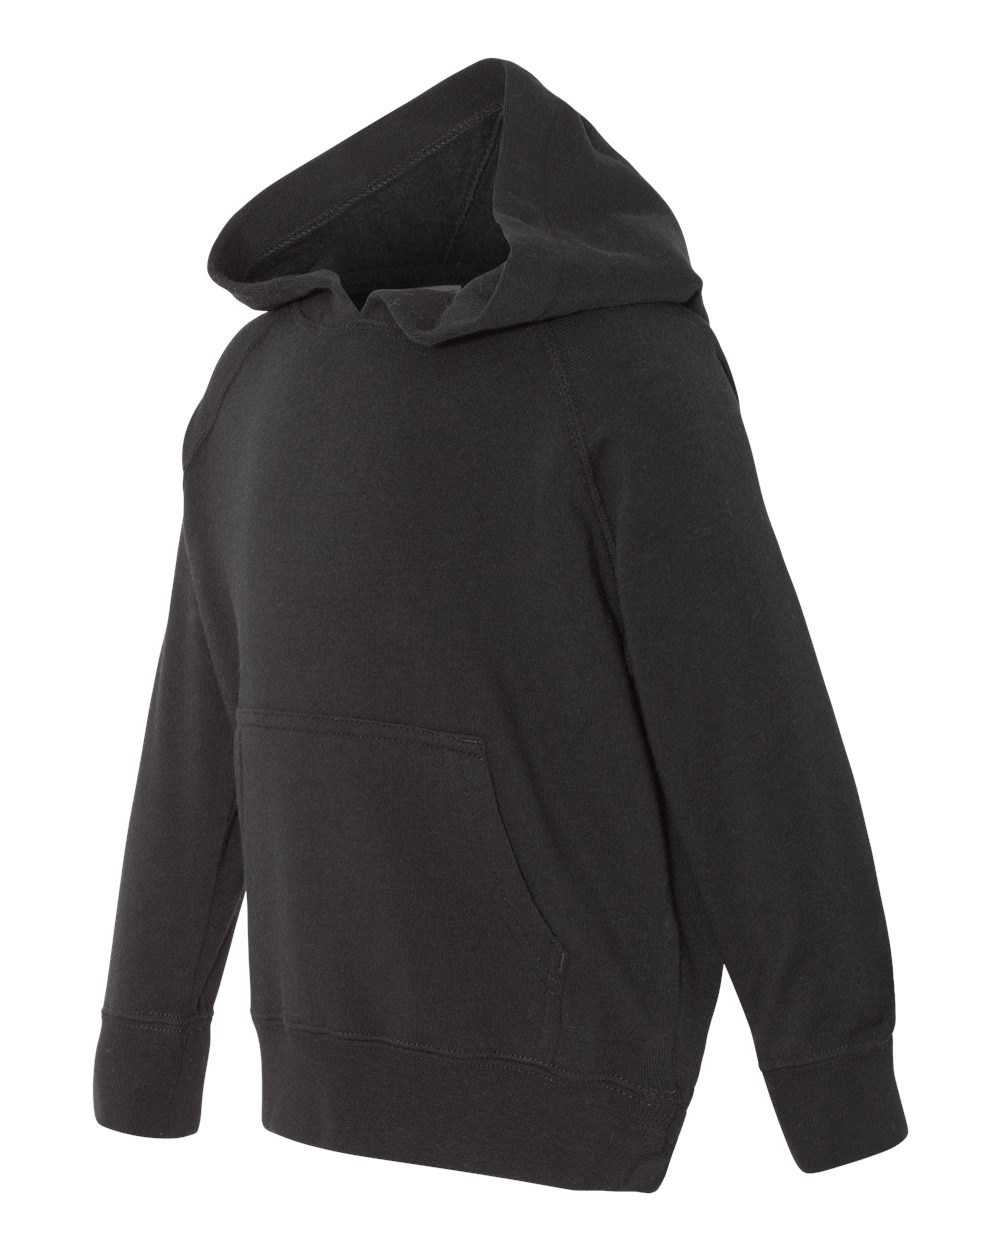 Independent Trading Co. PRM10TSB - Toddler Special Blend Raglan Hooded Pullover Sweatshirt